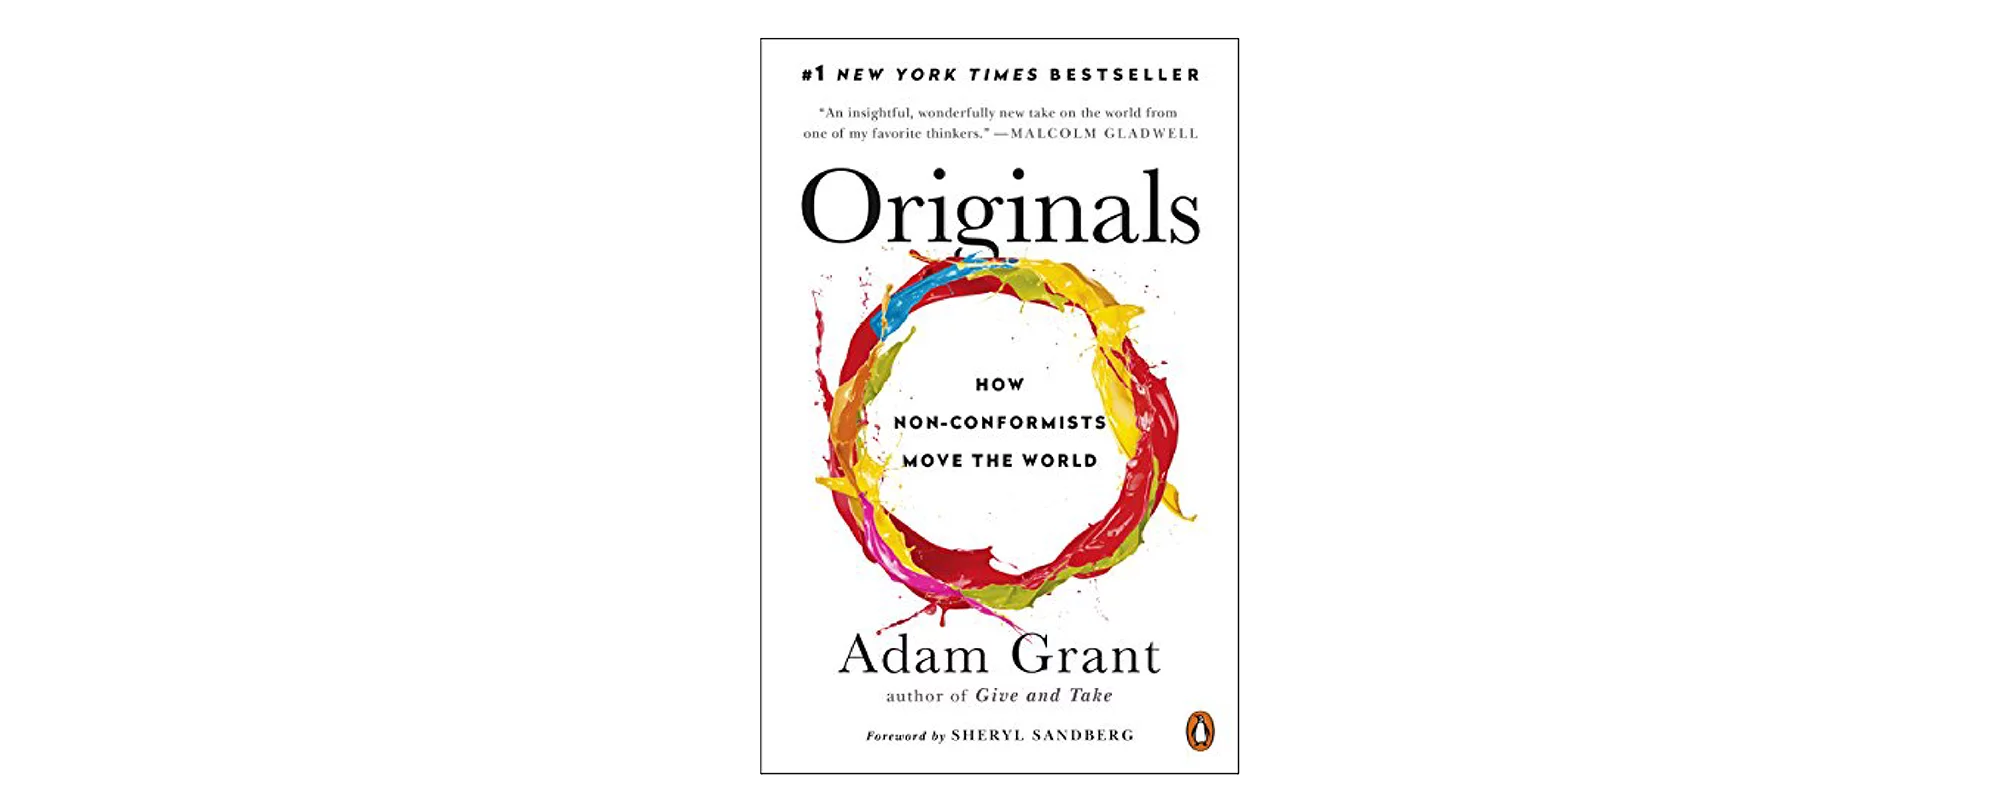 Originals: How Nonconformists Move the World by Adam Grant